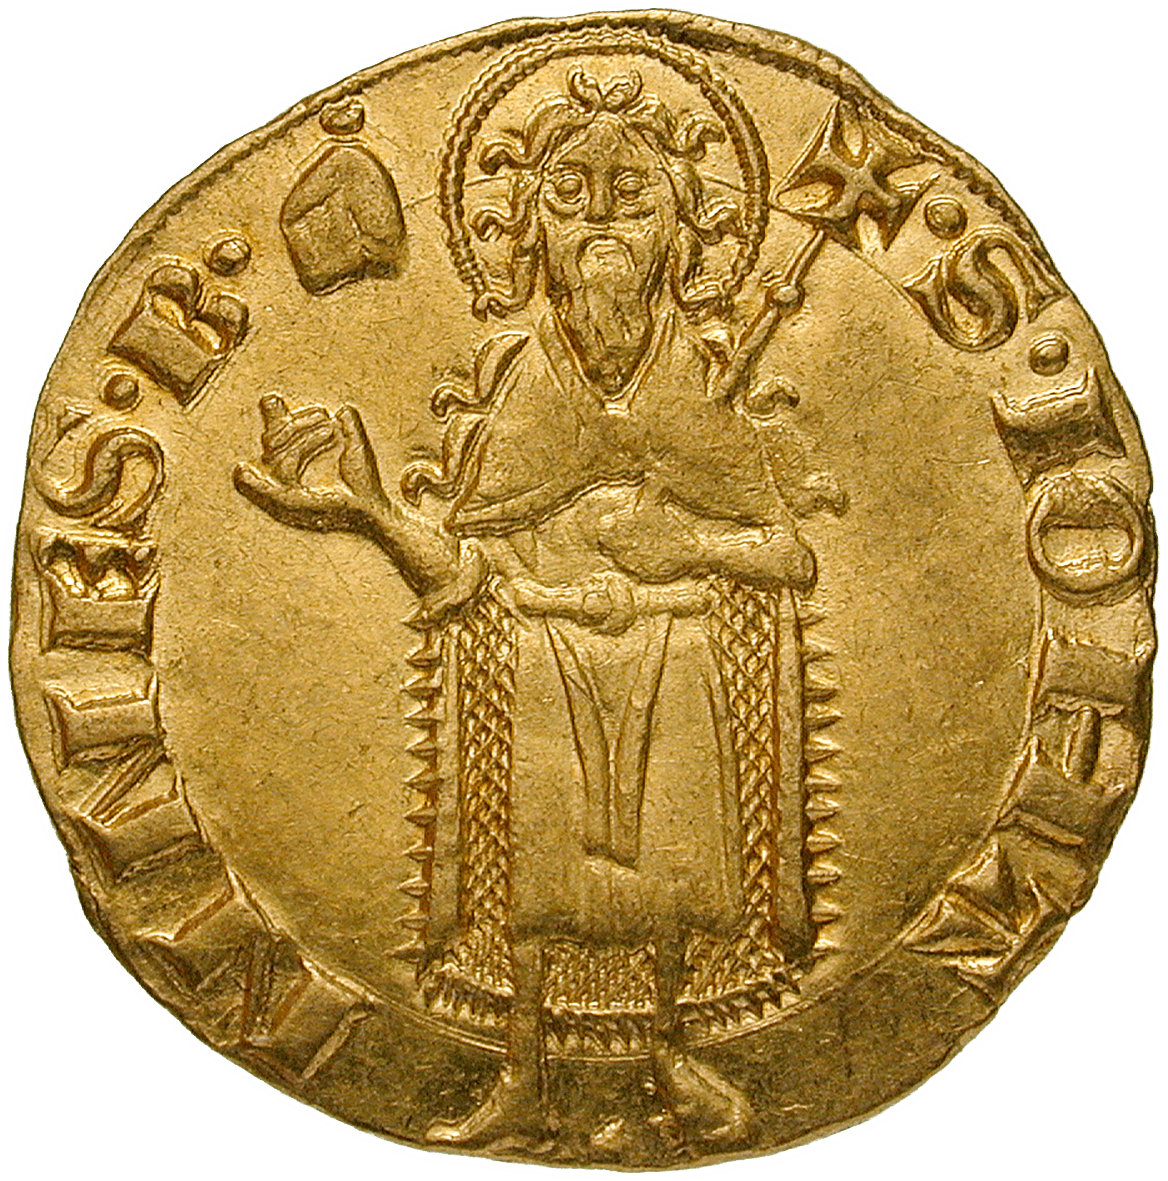 France, Duchy of Orange, Raymond IV, Florin (reverse)